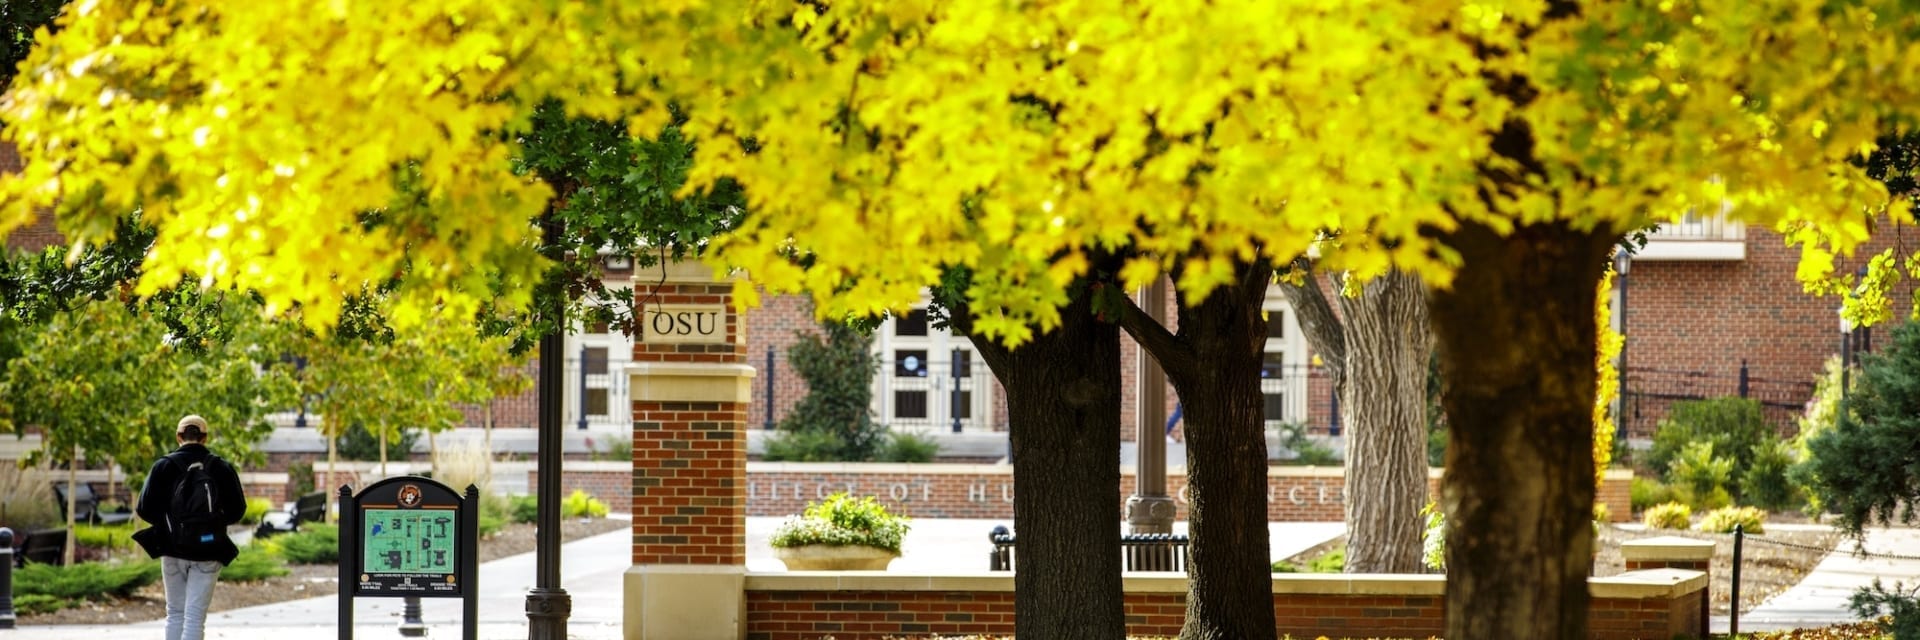 Oklahoma state university campus